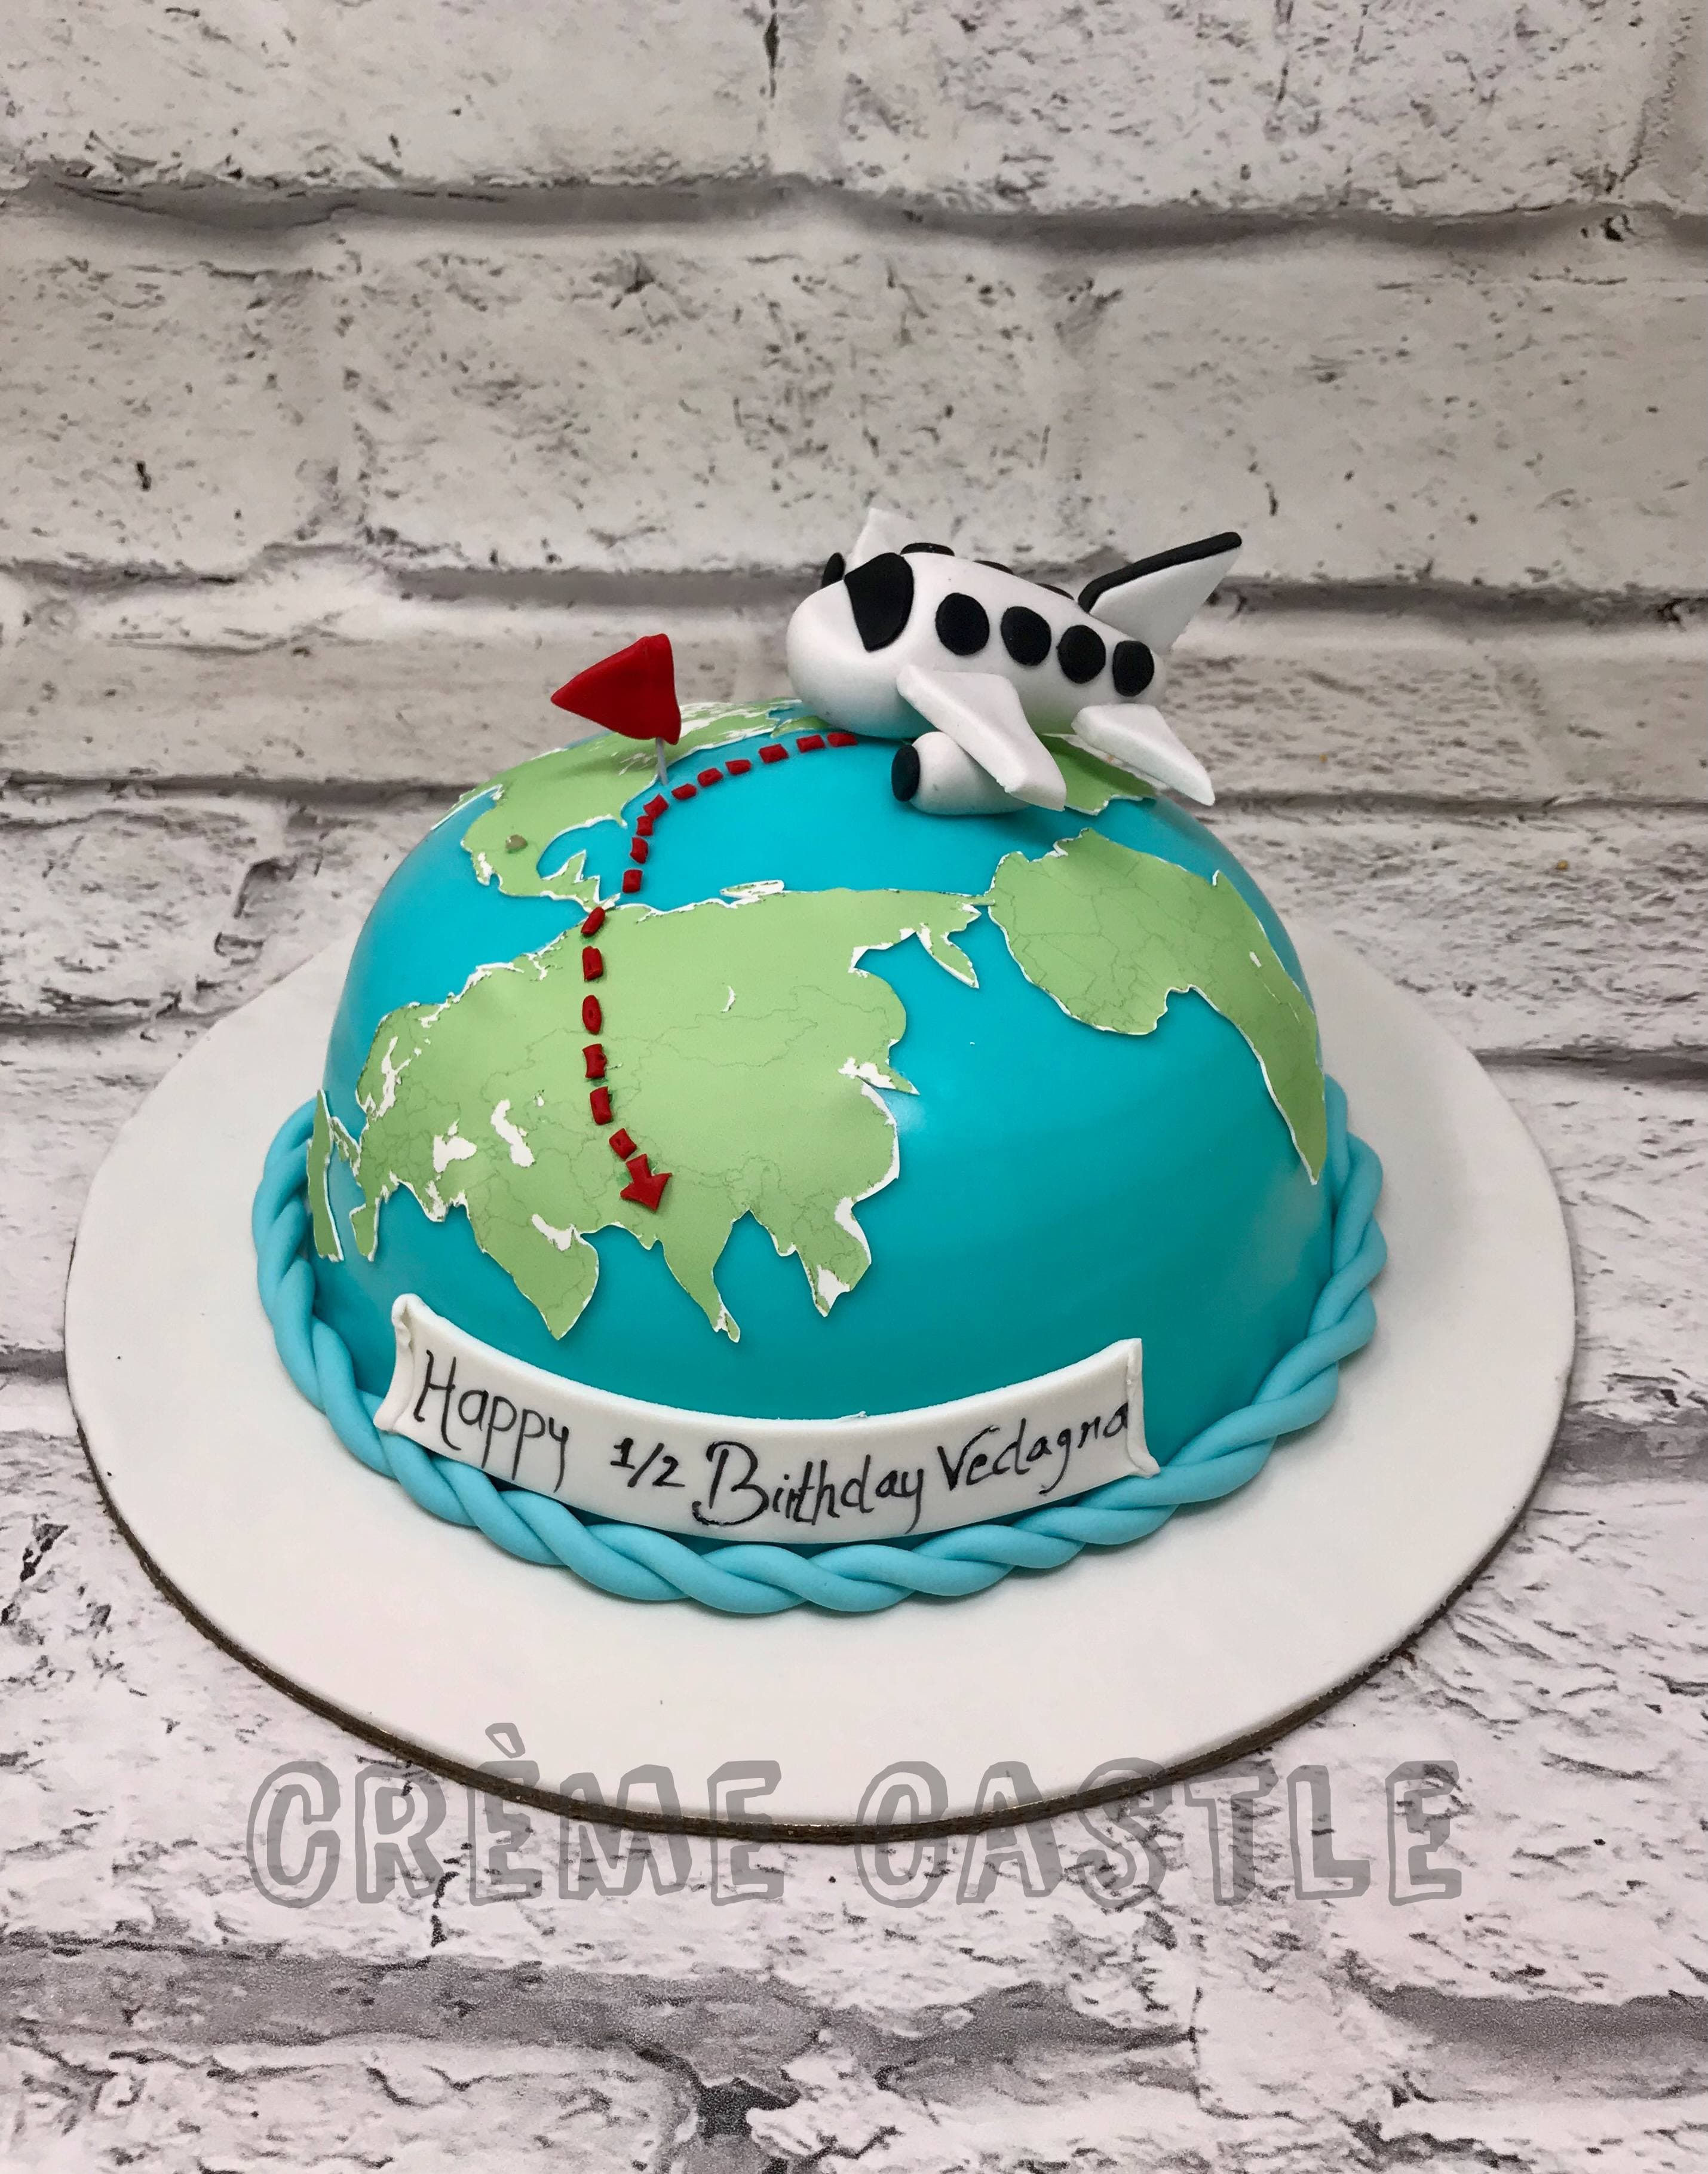 Travel cake - Decorated Cake by Vanilla bean cakes Cyprus - CakesDecor